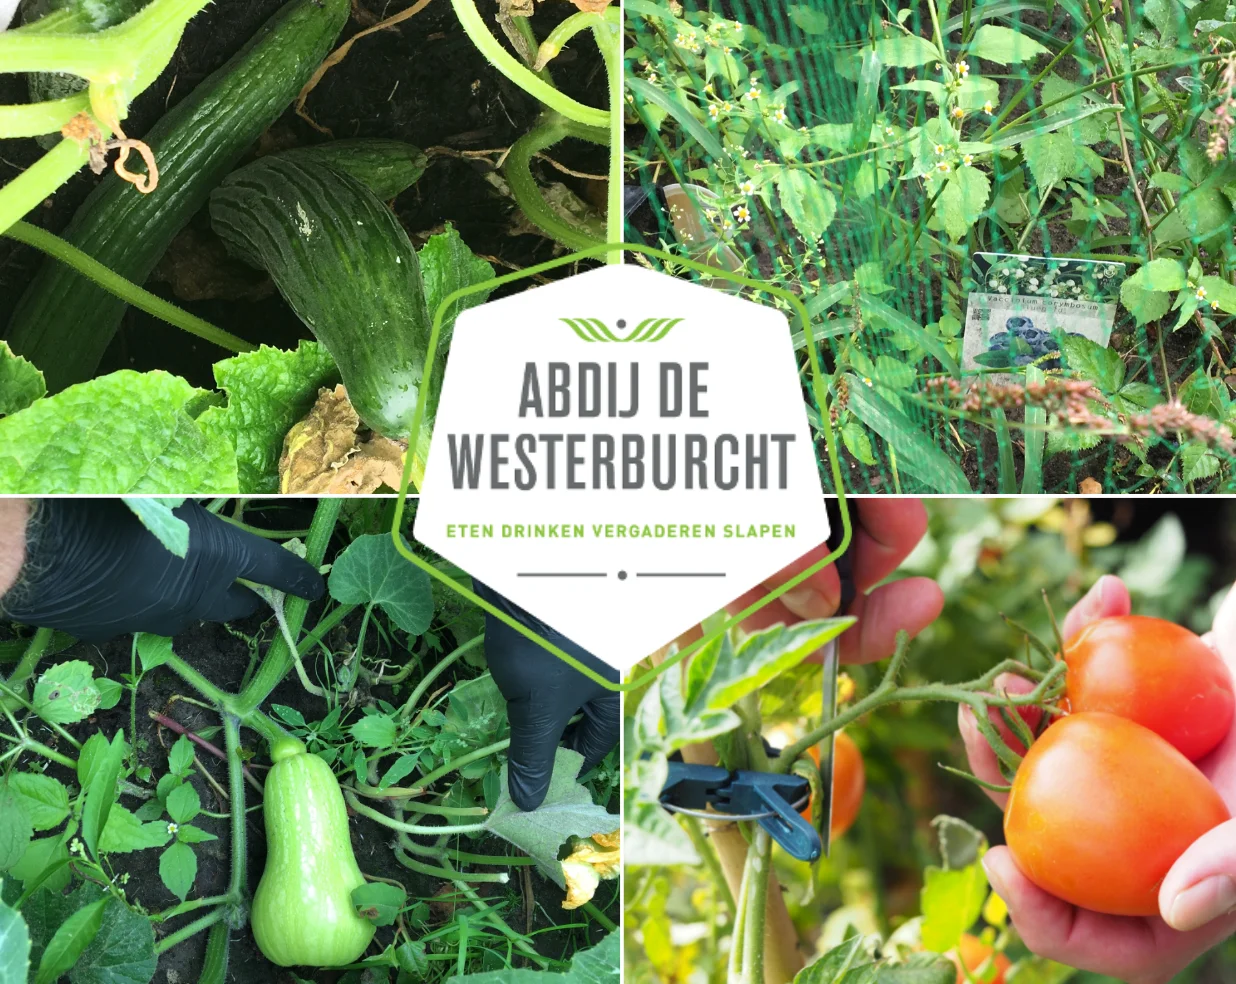 Abdij de Westerburcht: Sleeping in a sustainable location!